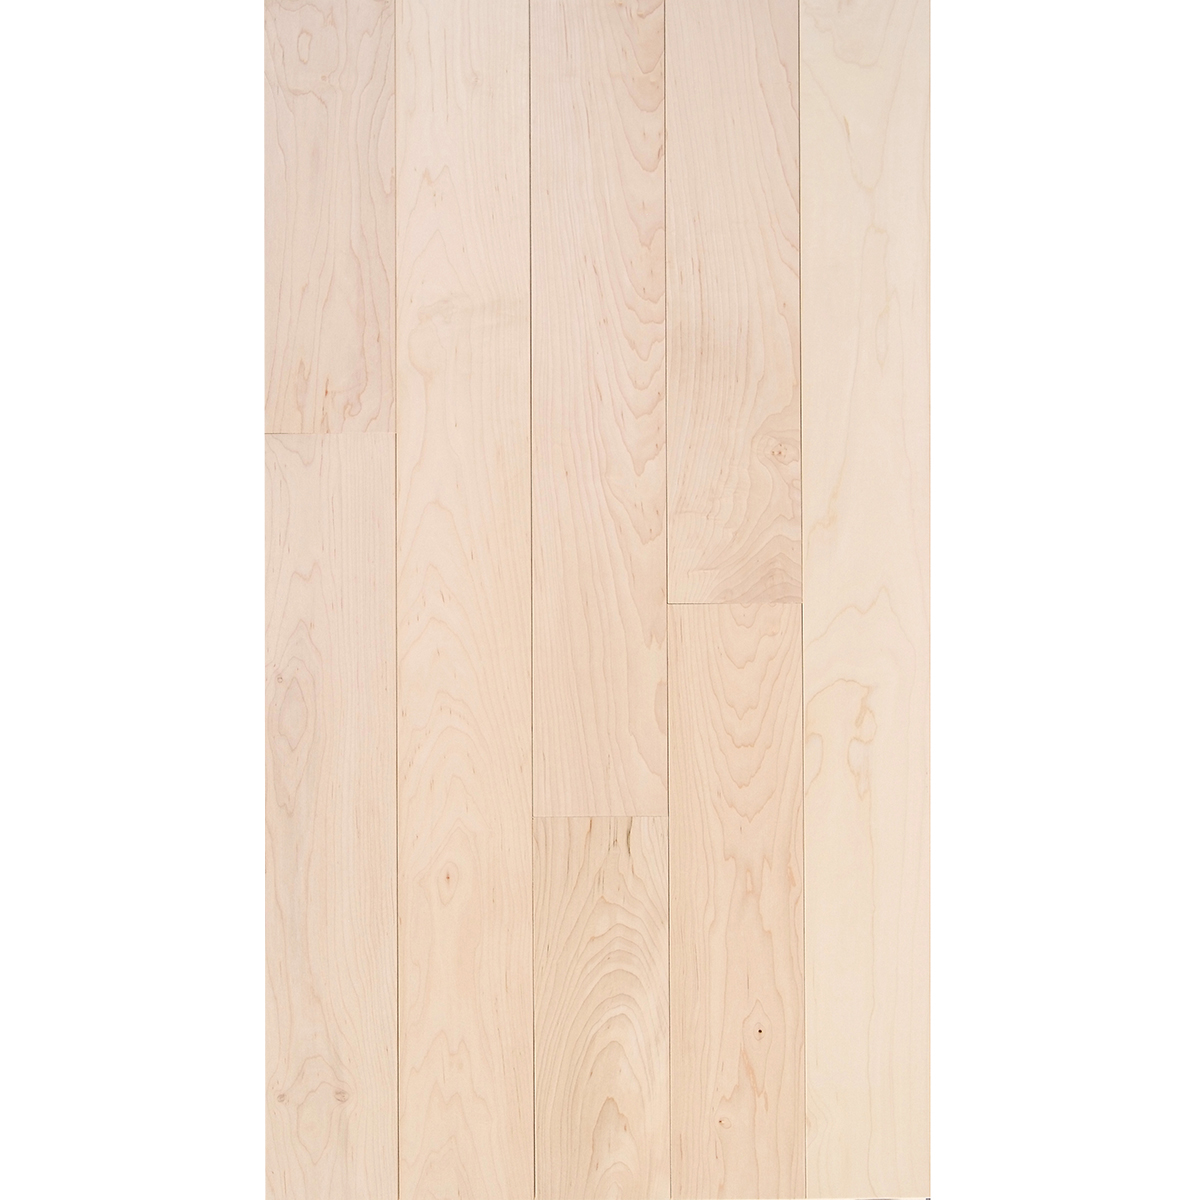 Hard Maple 3 4 X 1 Select Grade, Hard Maple Hardwood Flooring